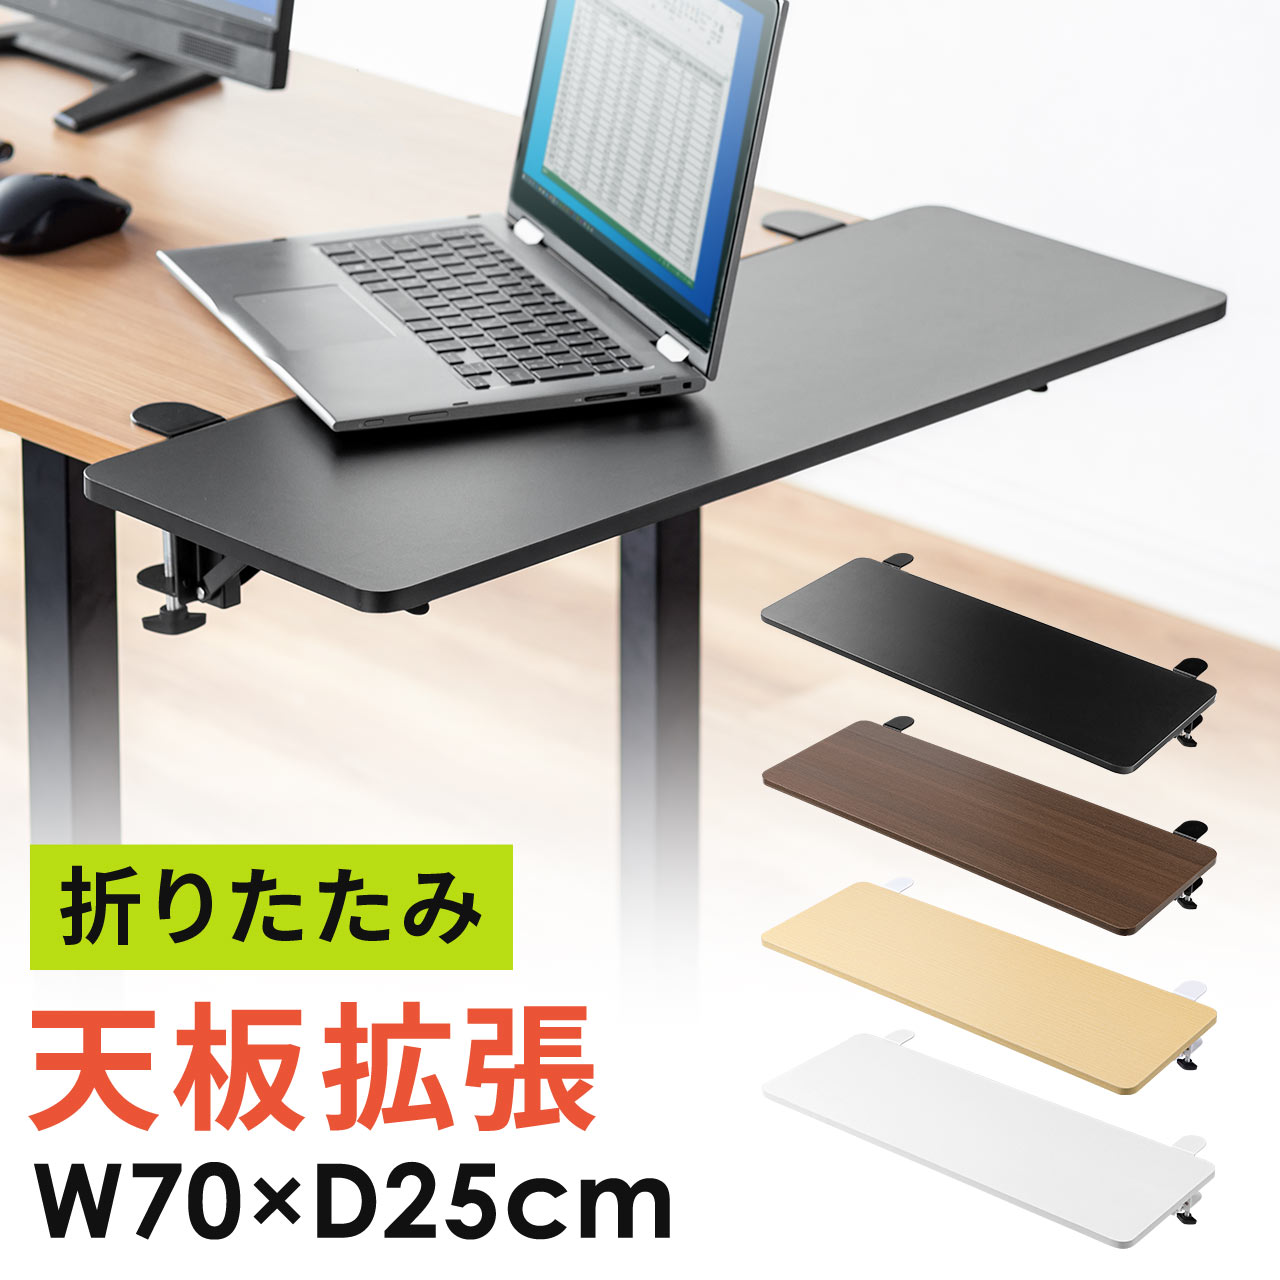 Amazon | バッファロー WiFi 無線LAN 子機 USB2.0用 11n/g/b 150Mbps 日本メーカー WI-U2-150M/N |  バッファロー | 無線LAN子機 通販